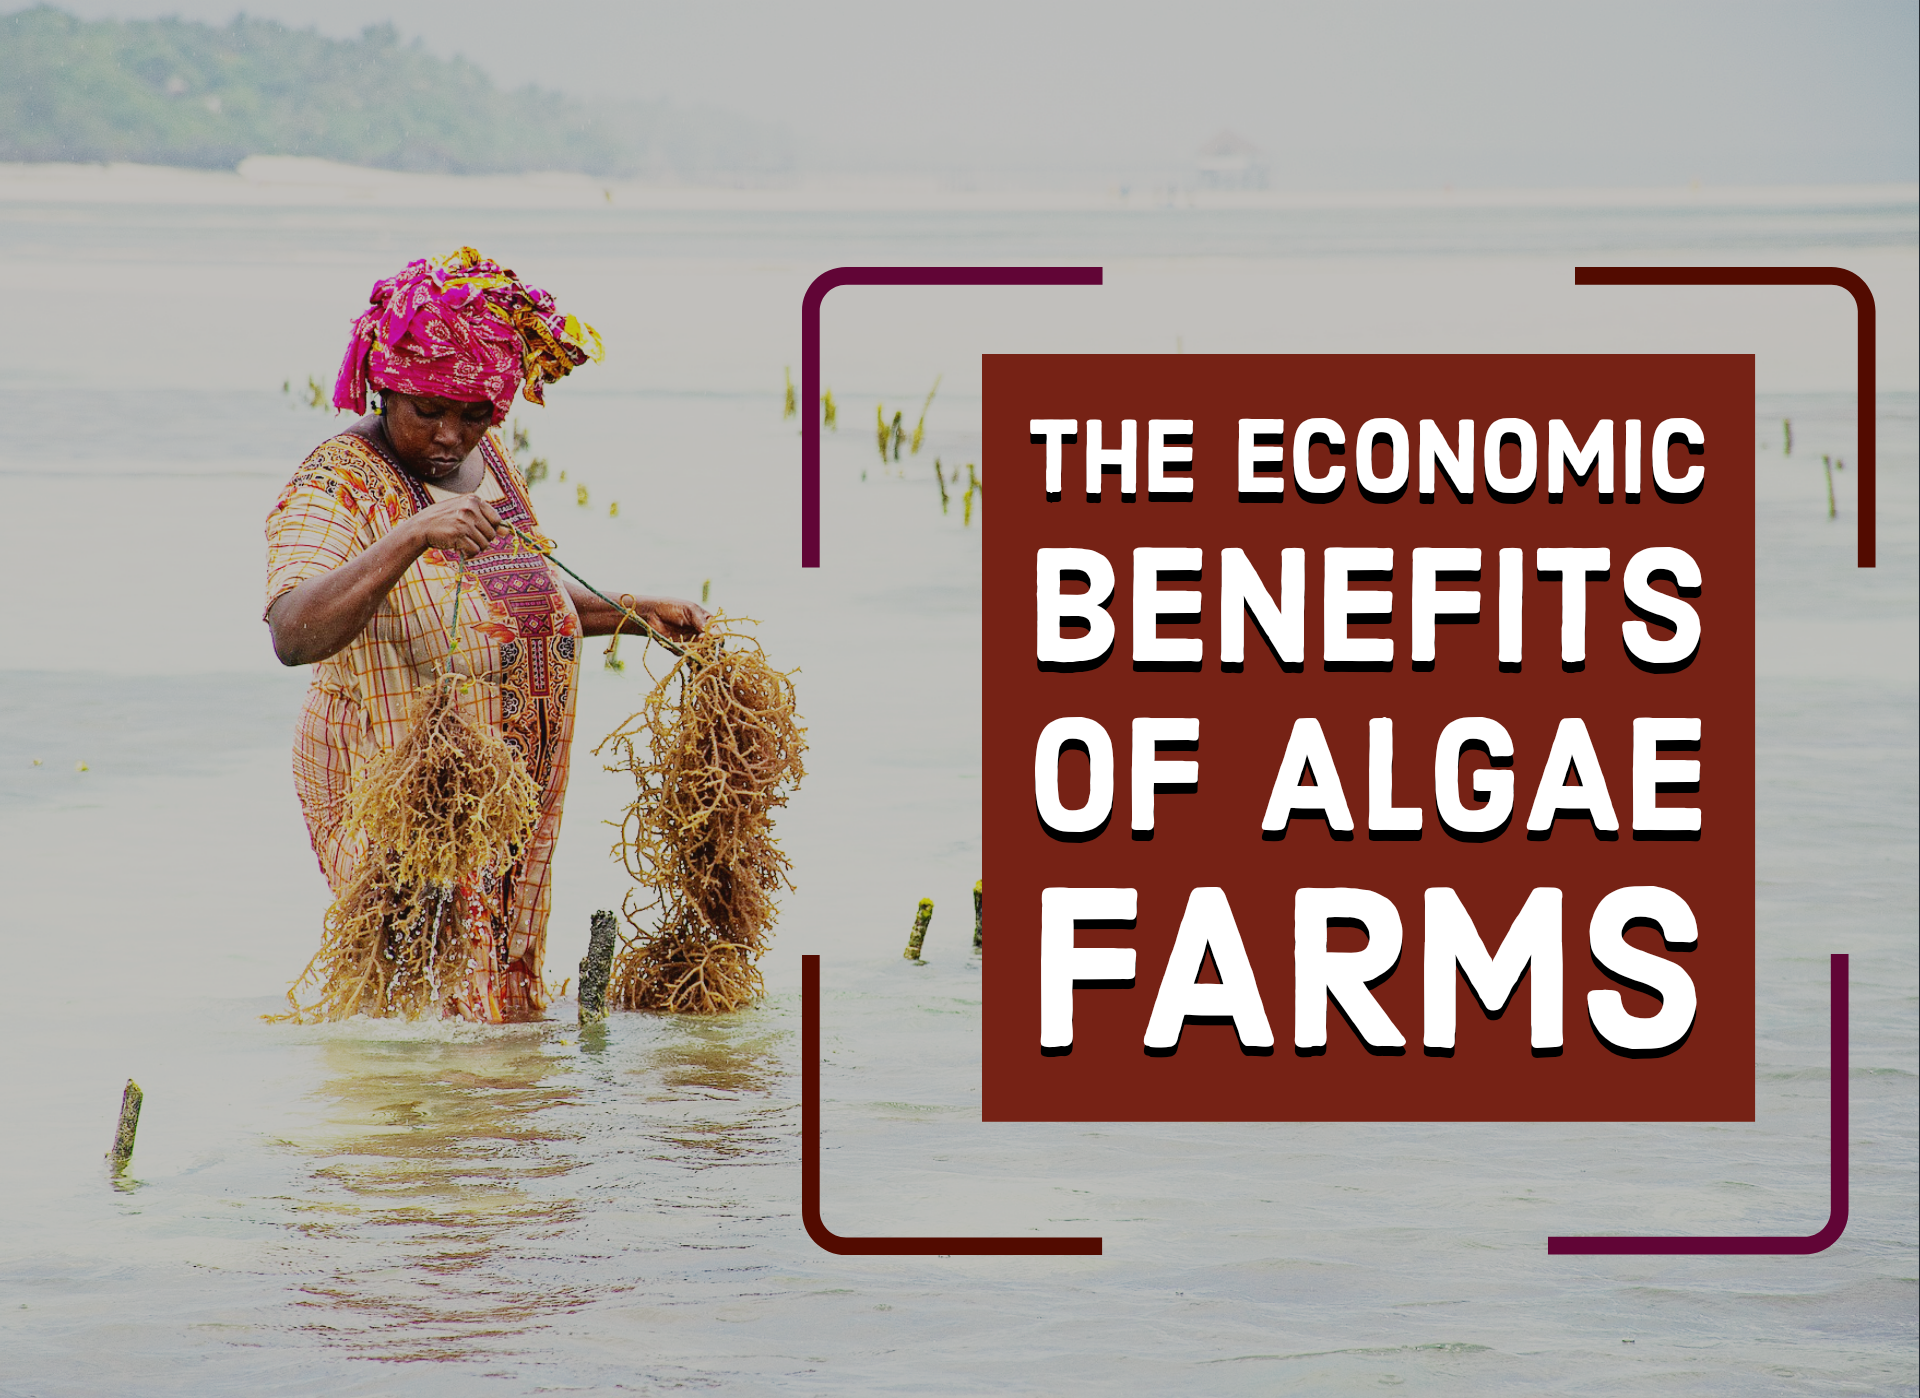 The Economic Benefits of Algae Farms